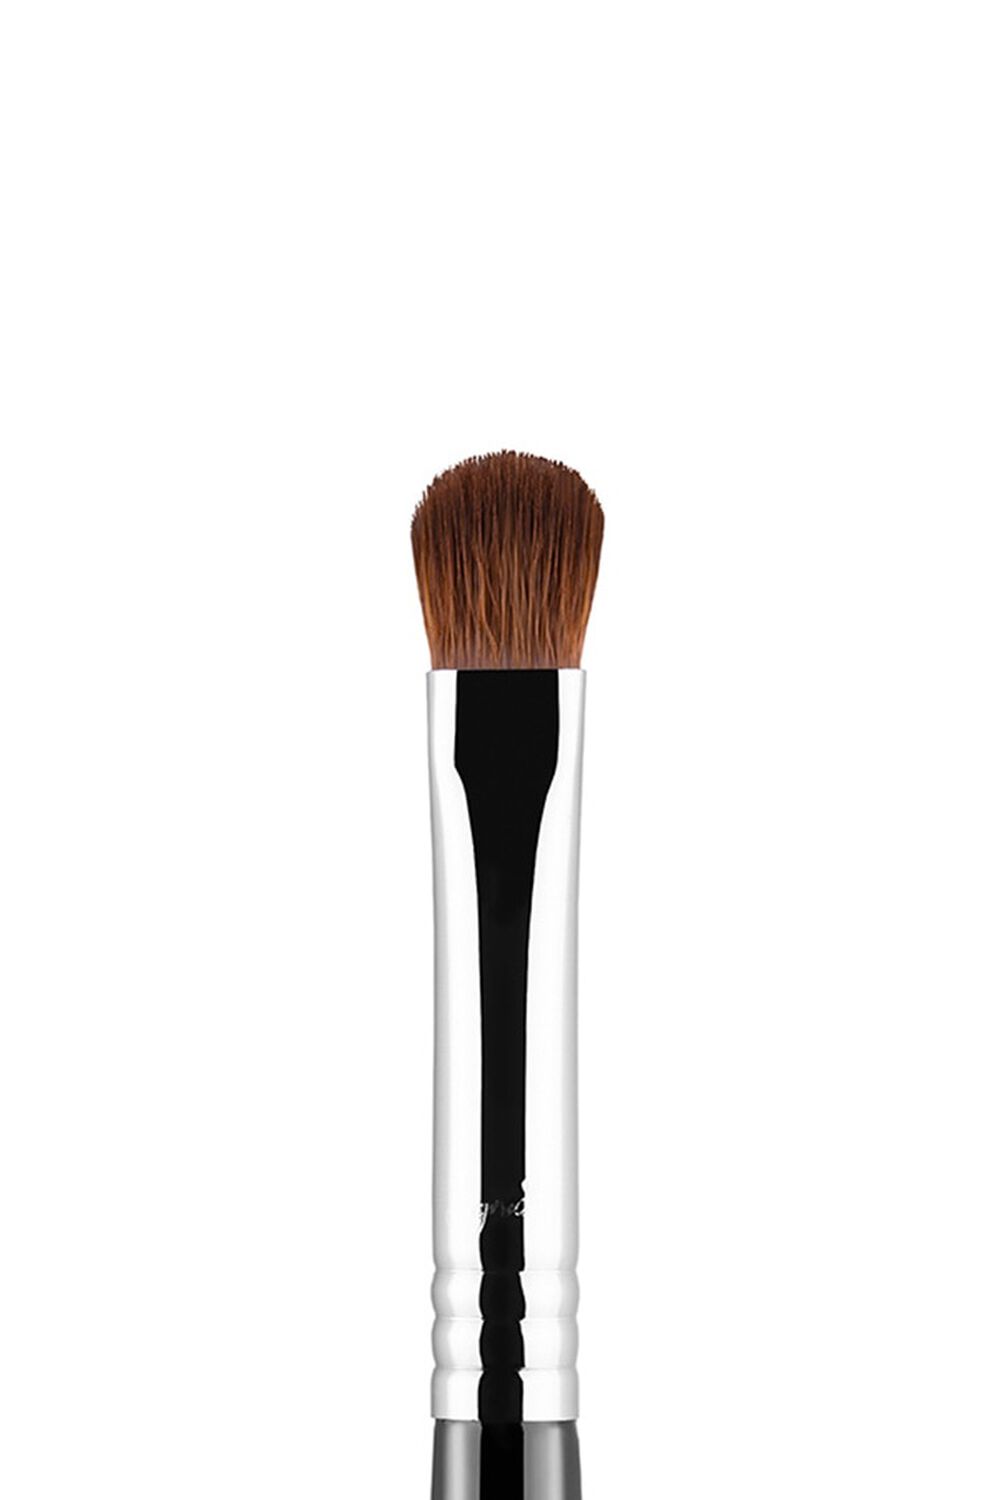 Sigma Beauty E54 Medium Sweeper Brush, image 2